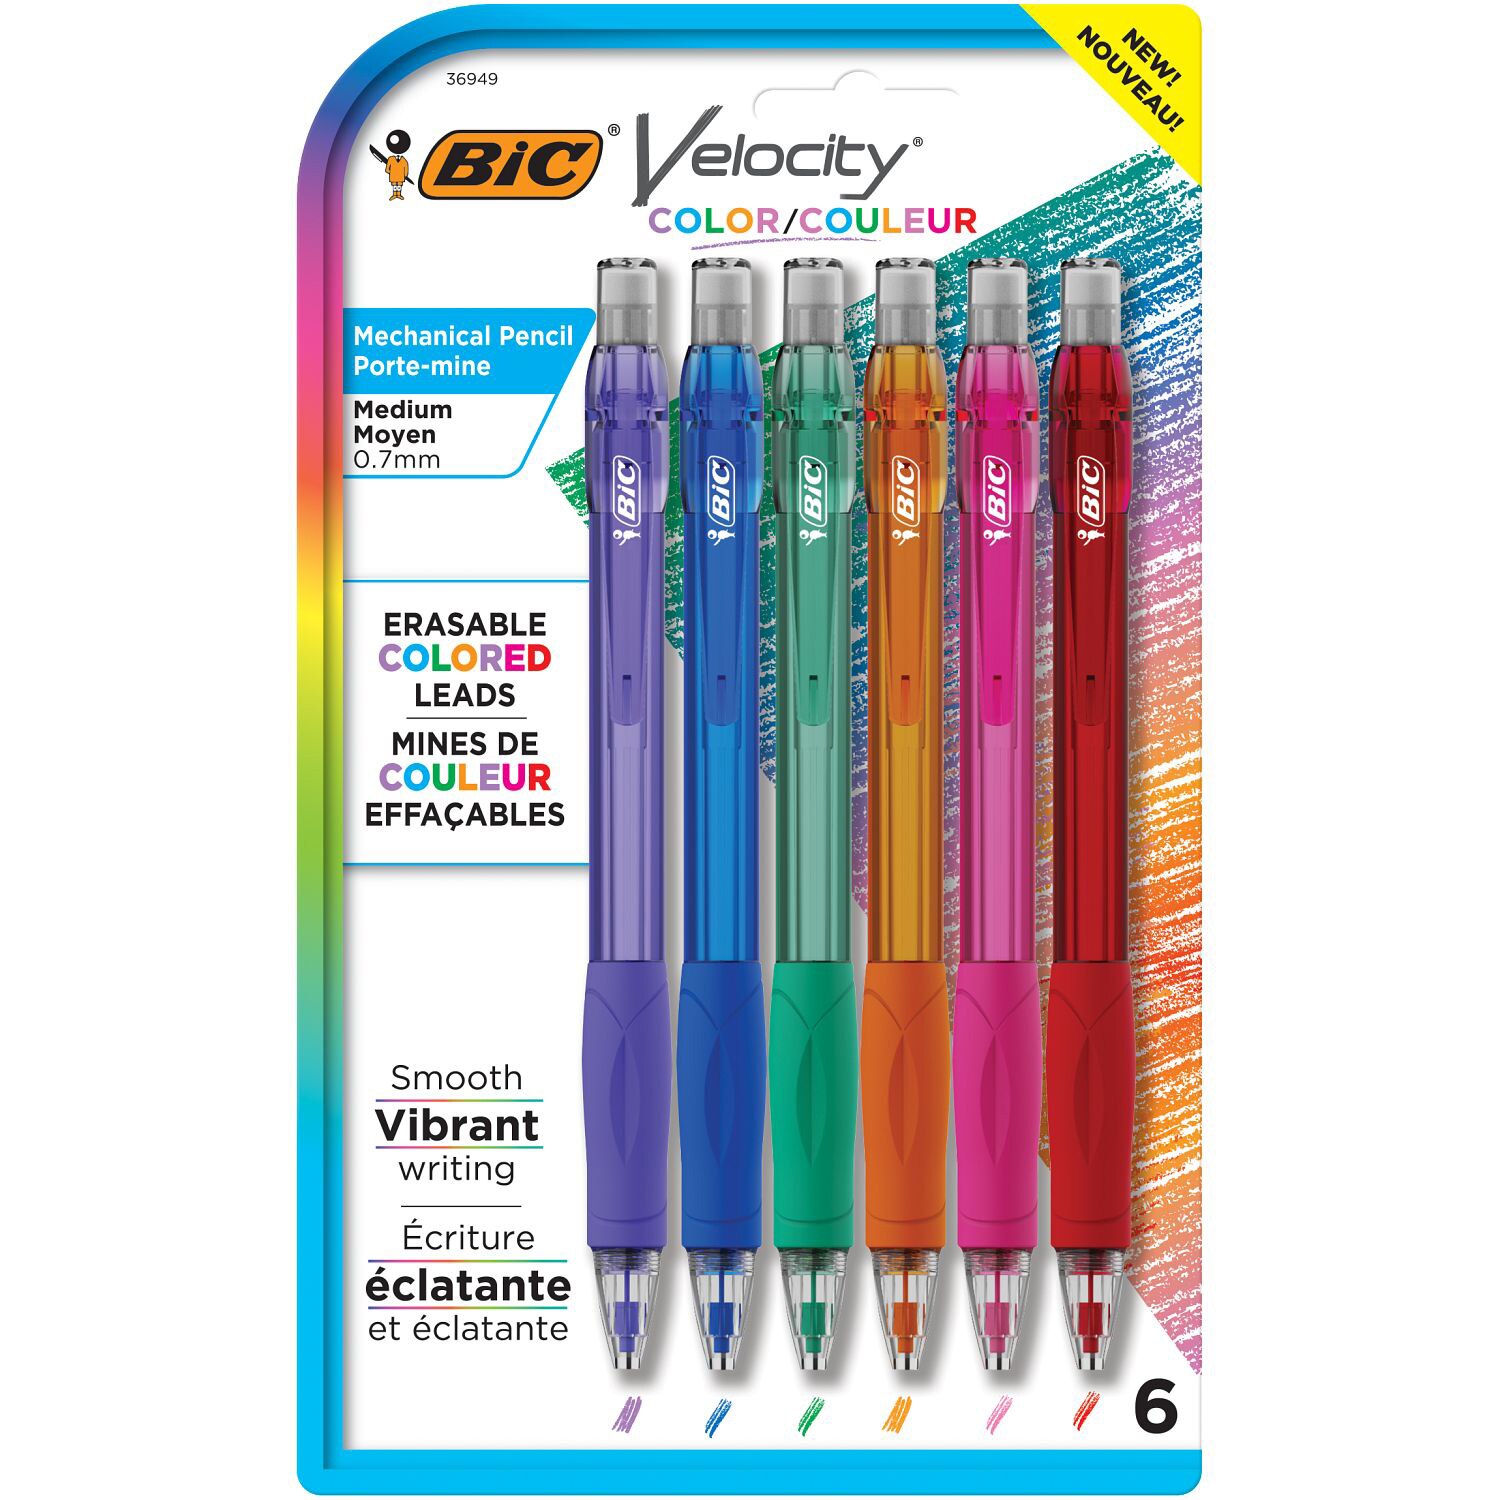 Bic Velocity Pencil Assorted 6pk